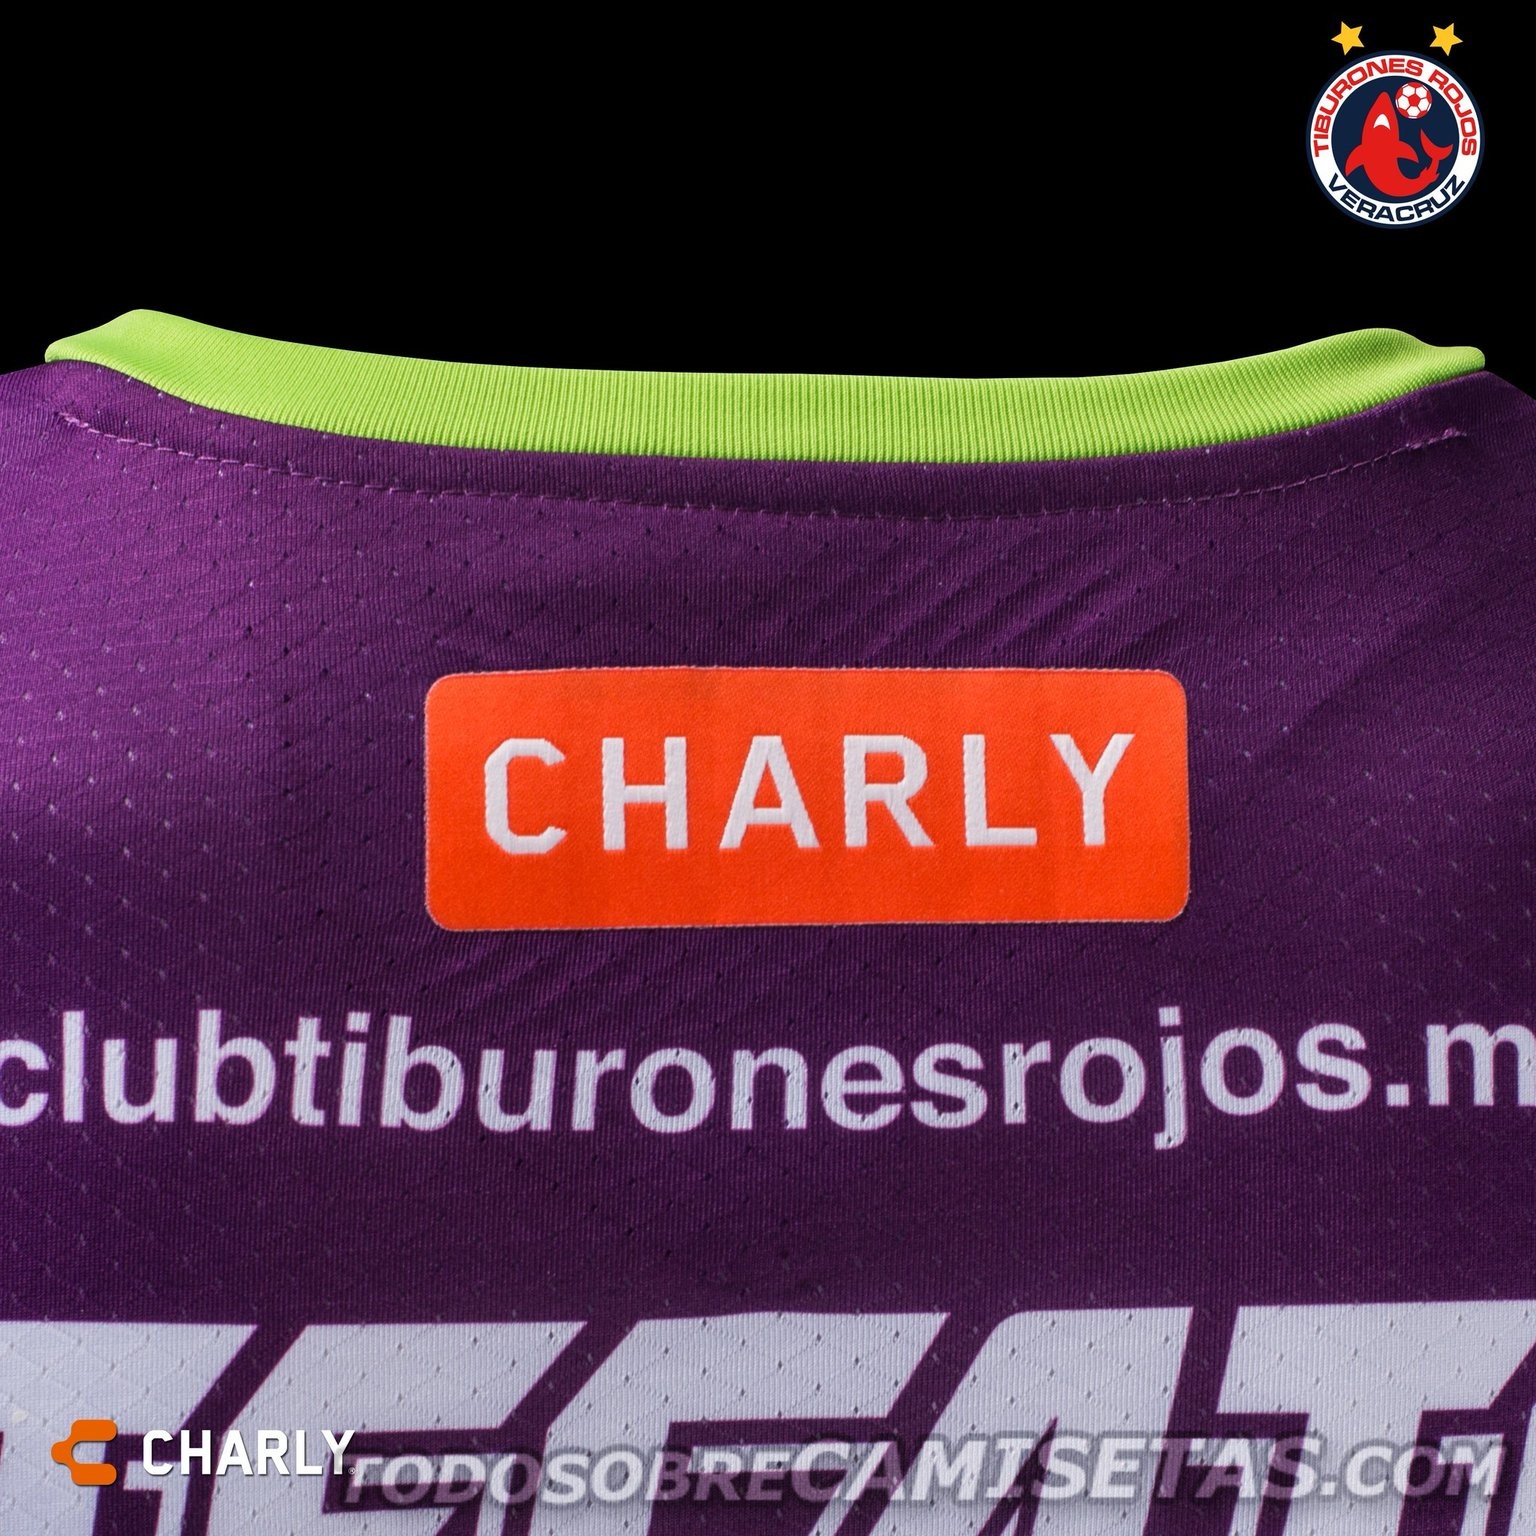 Tercer jersey Charly Futbol de Veracruz 2018